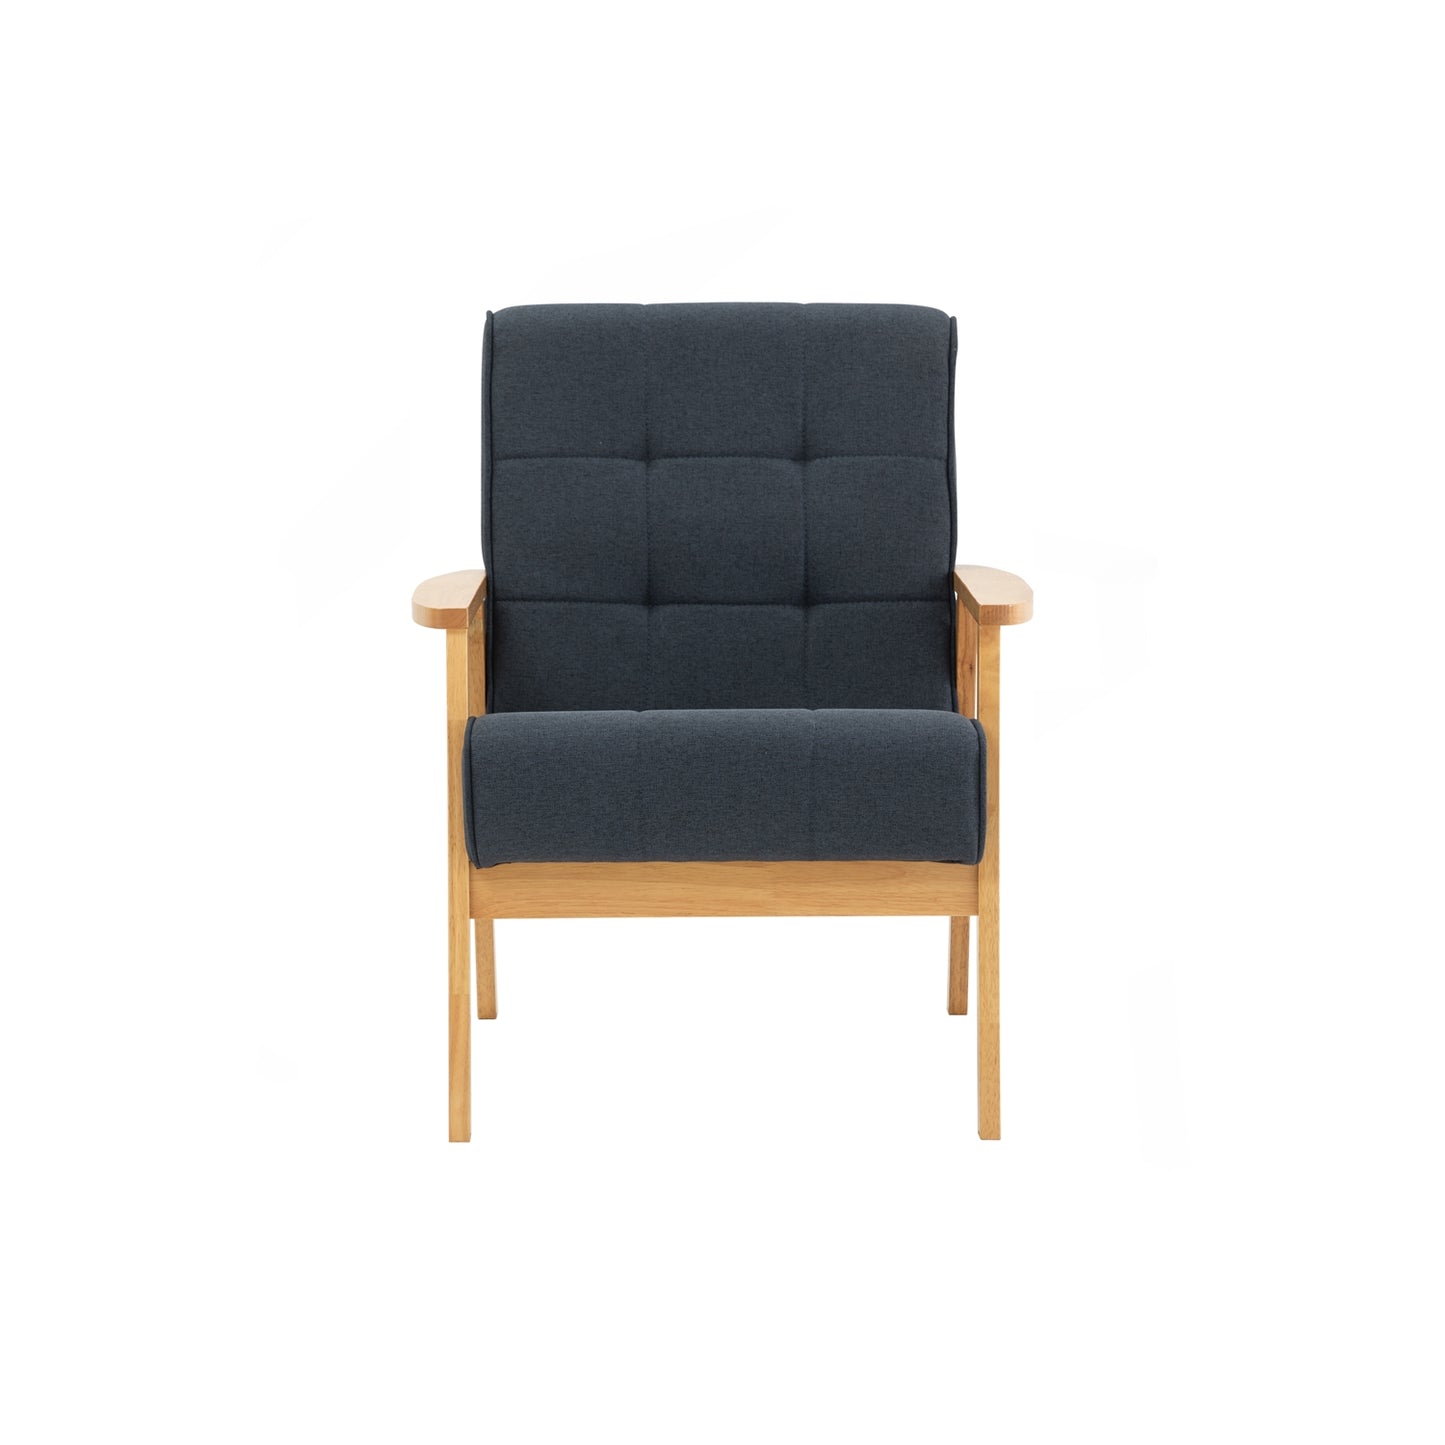 Hikaru single seat sofa